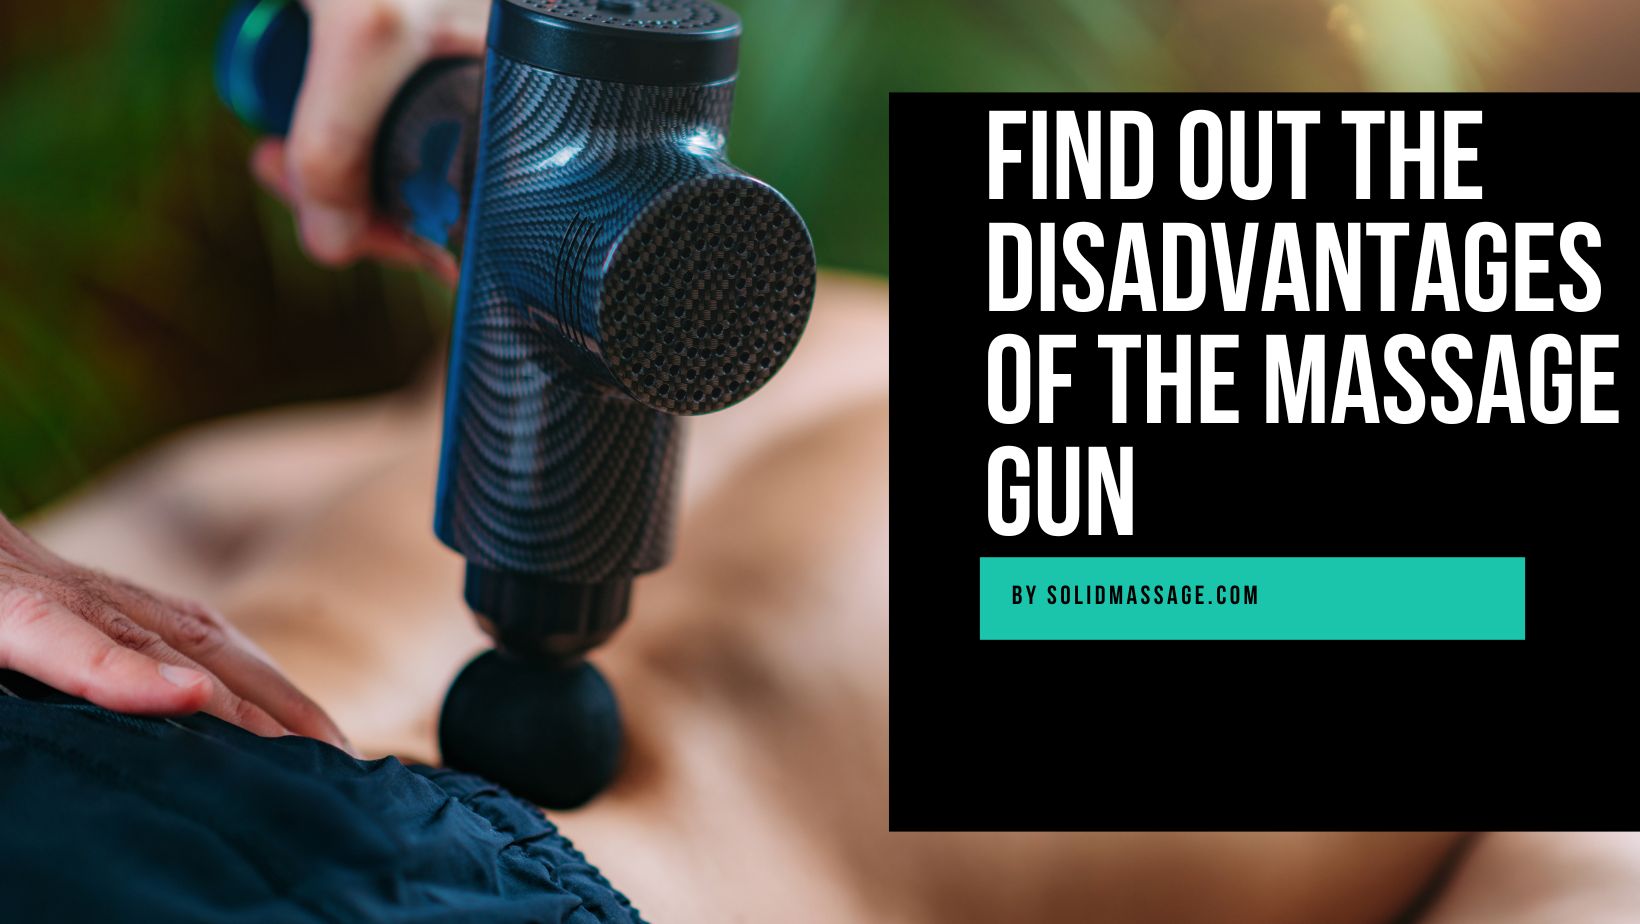 Disadvantages of the Massage Gun